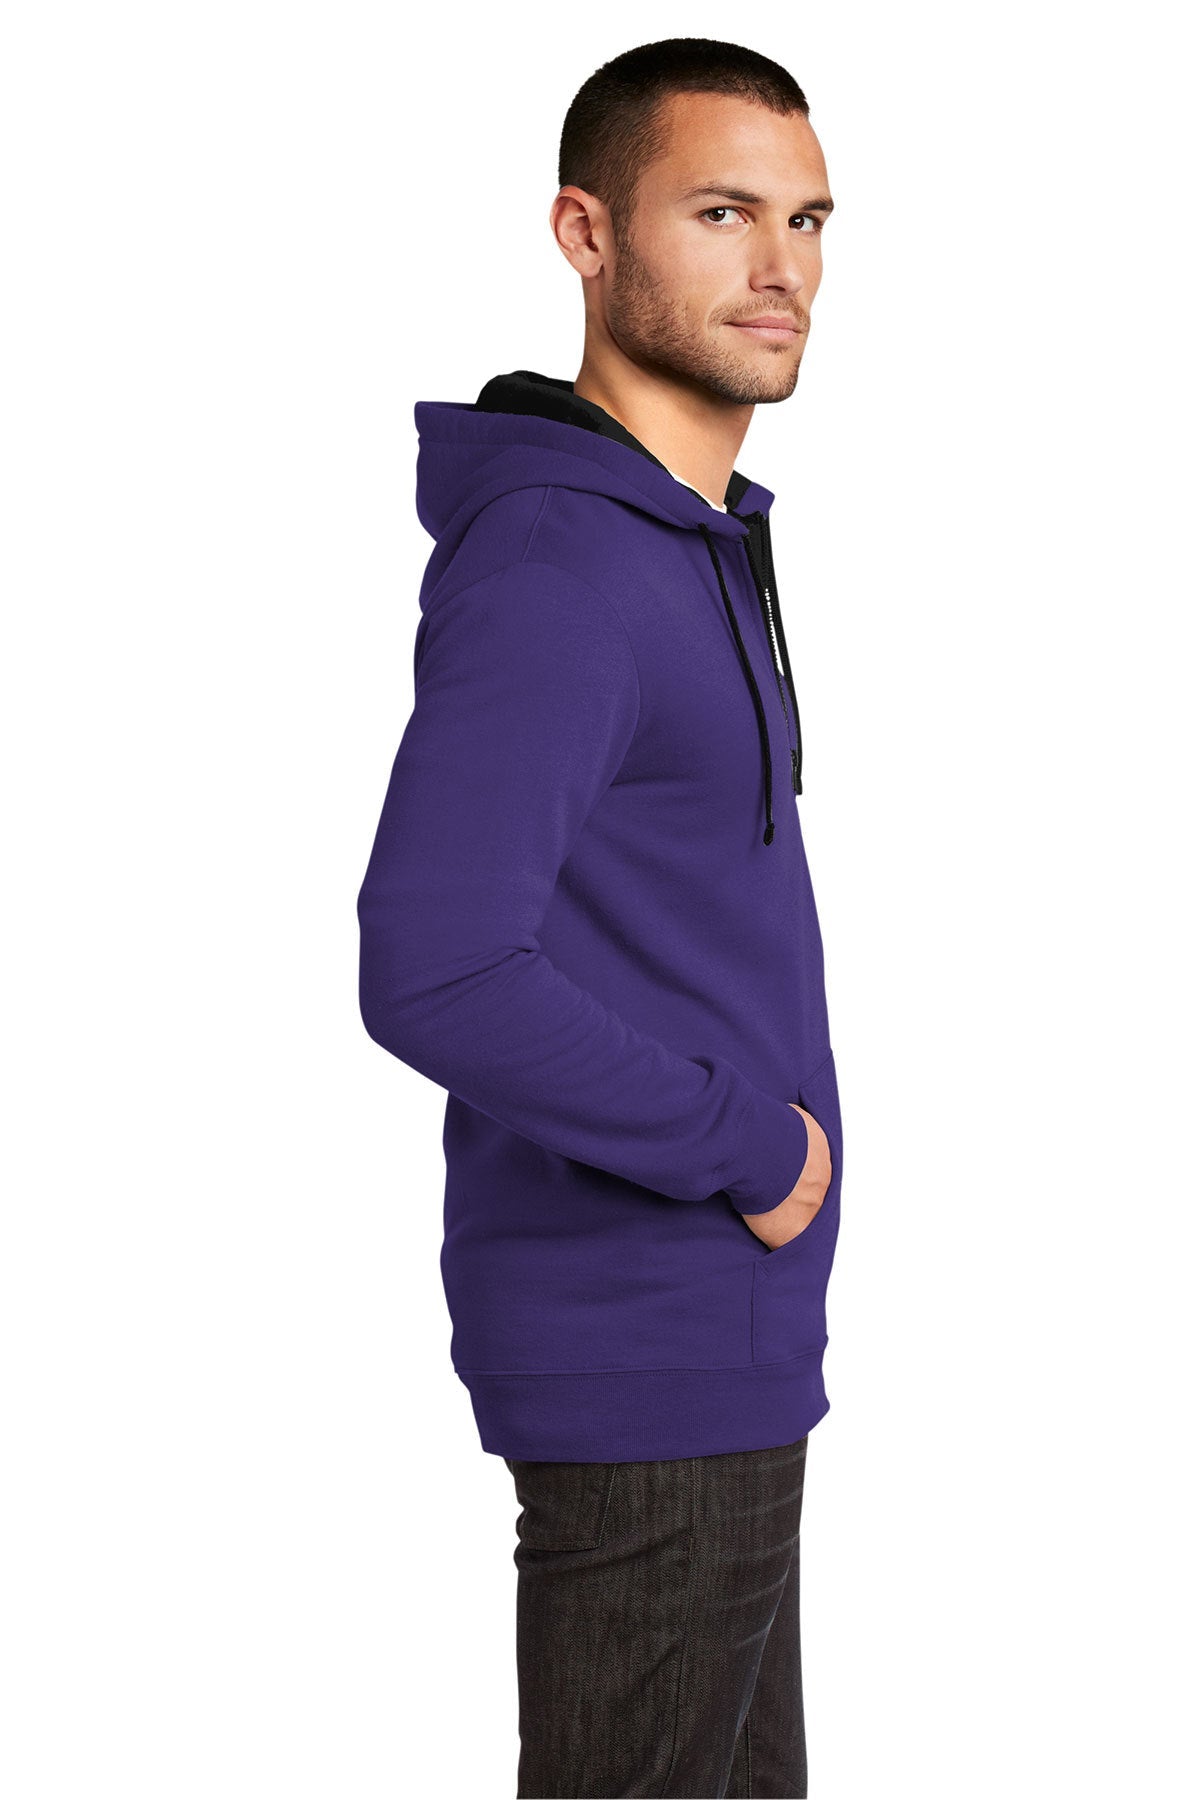 district_dt800 _purple_company_logo_sweatshirts